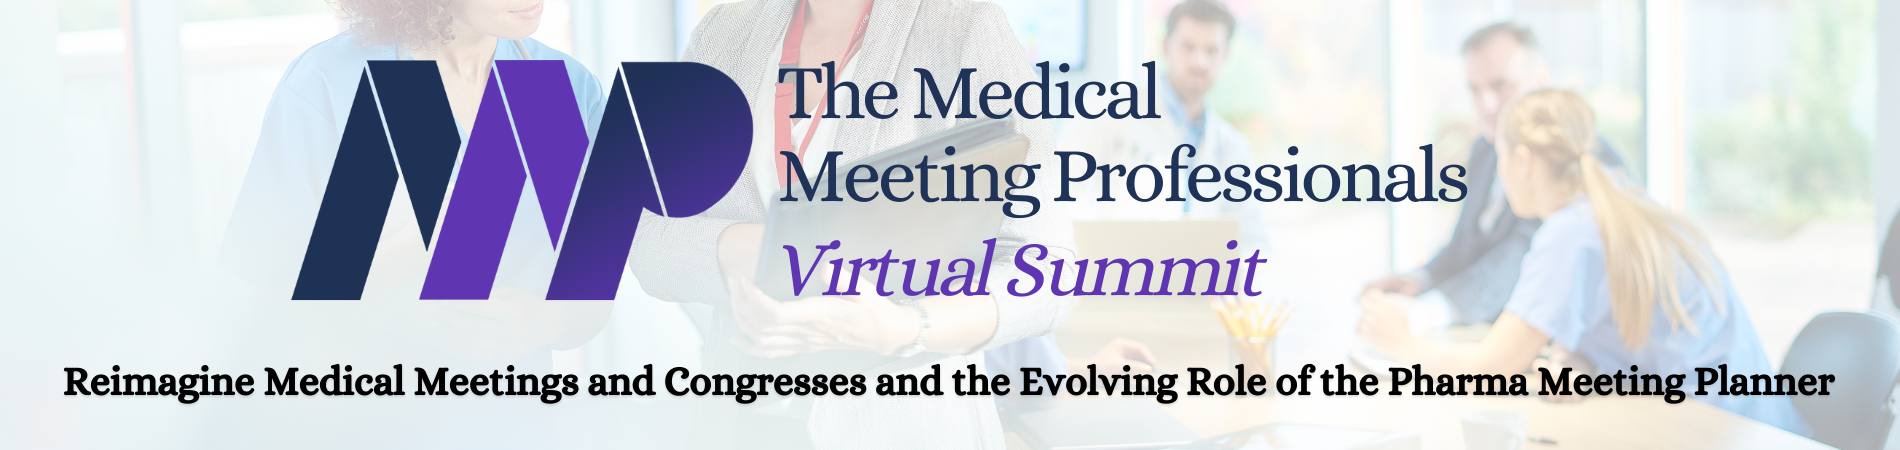 Medical Meeting Professionals Virtual Summit